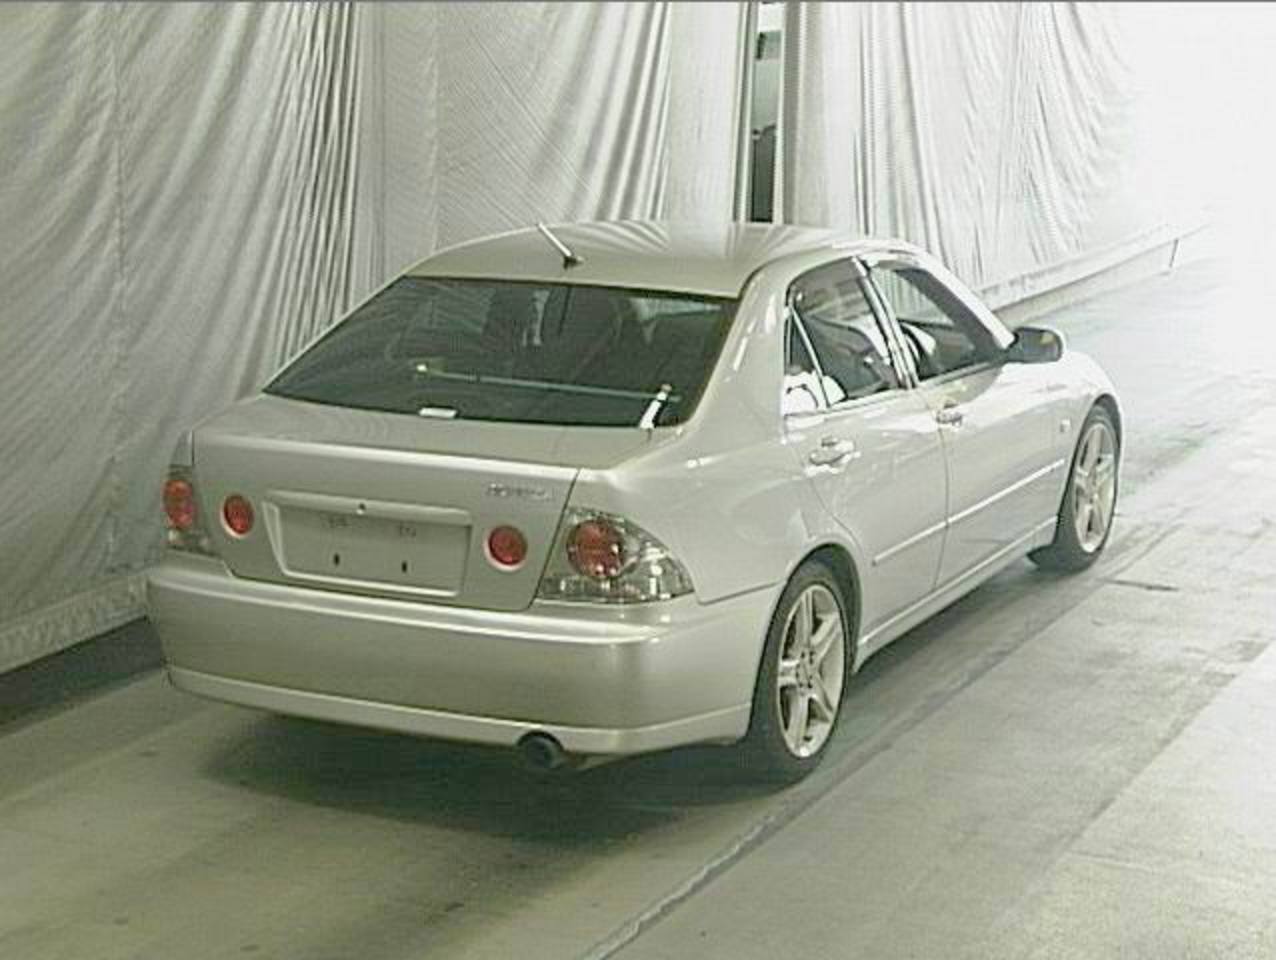 "'2001 Nissan Sentra XE Silver 2dr convertible 5.7L 8cyl"